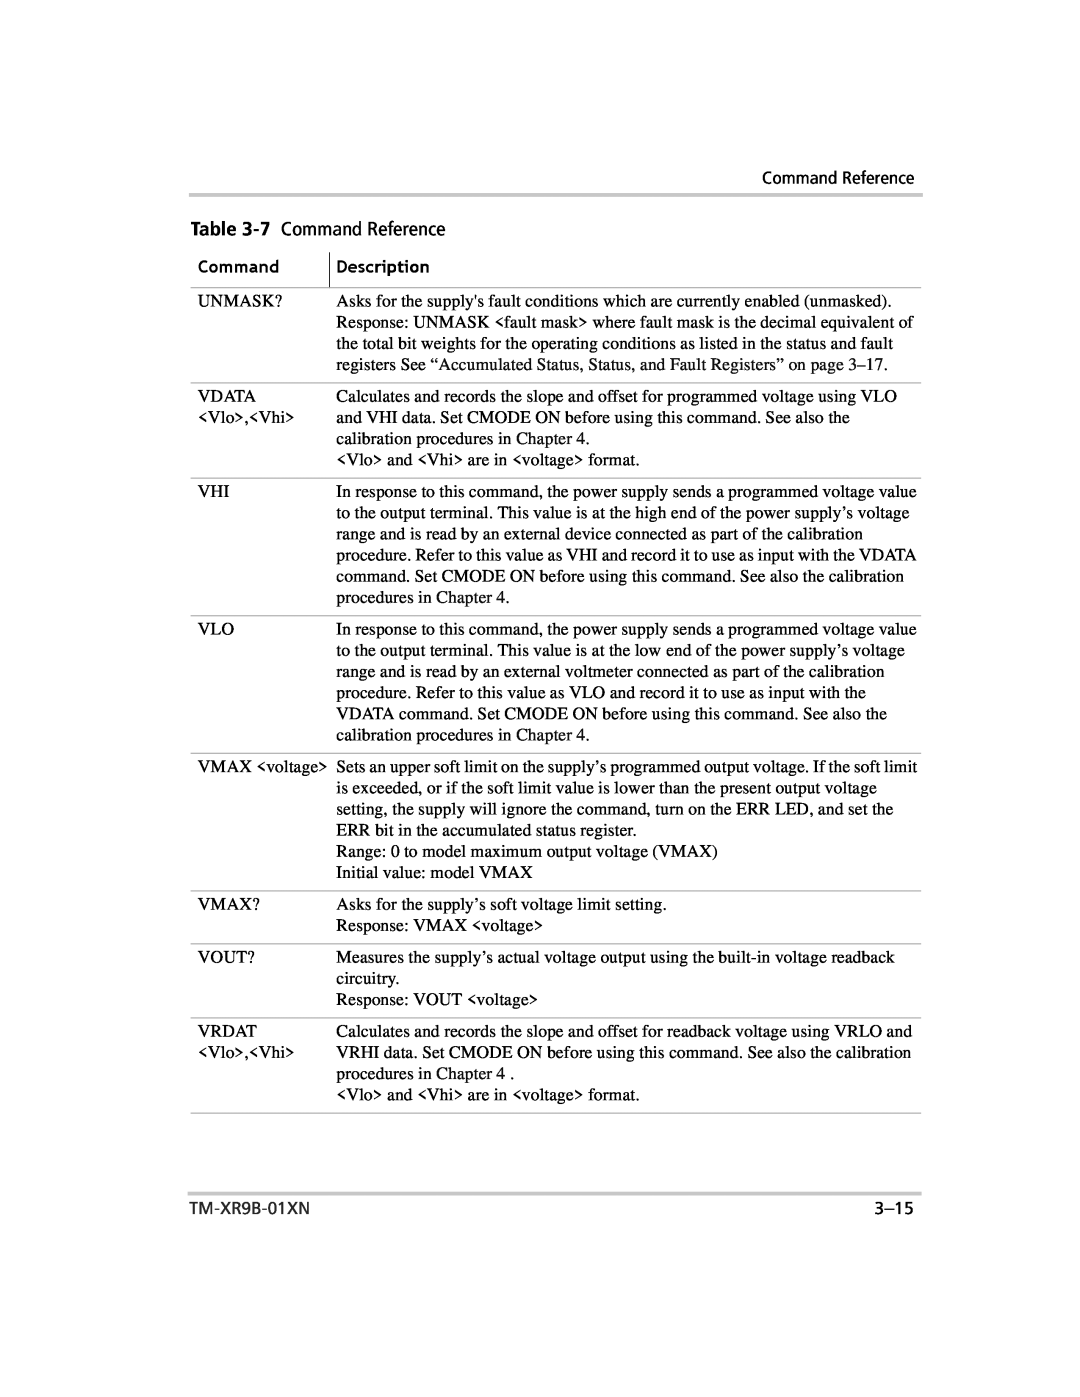 Xantrex Technology ENET-XFR3 manual 7 Command Reference, TM-XR9B-01XN, 3-15 